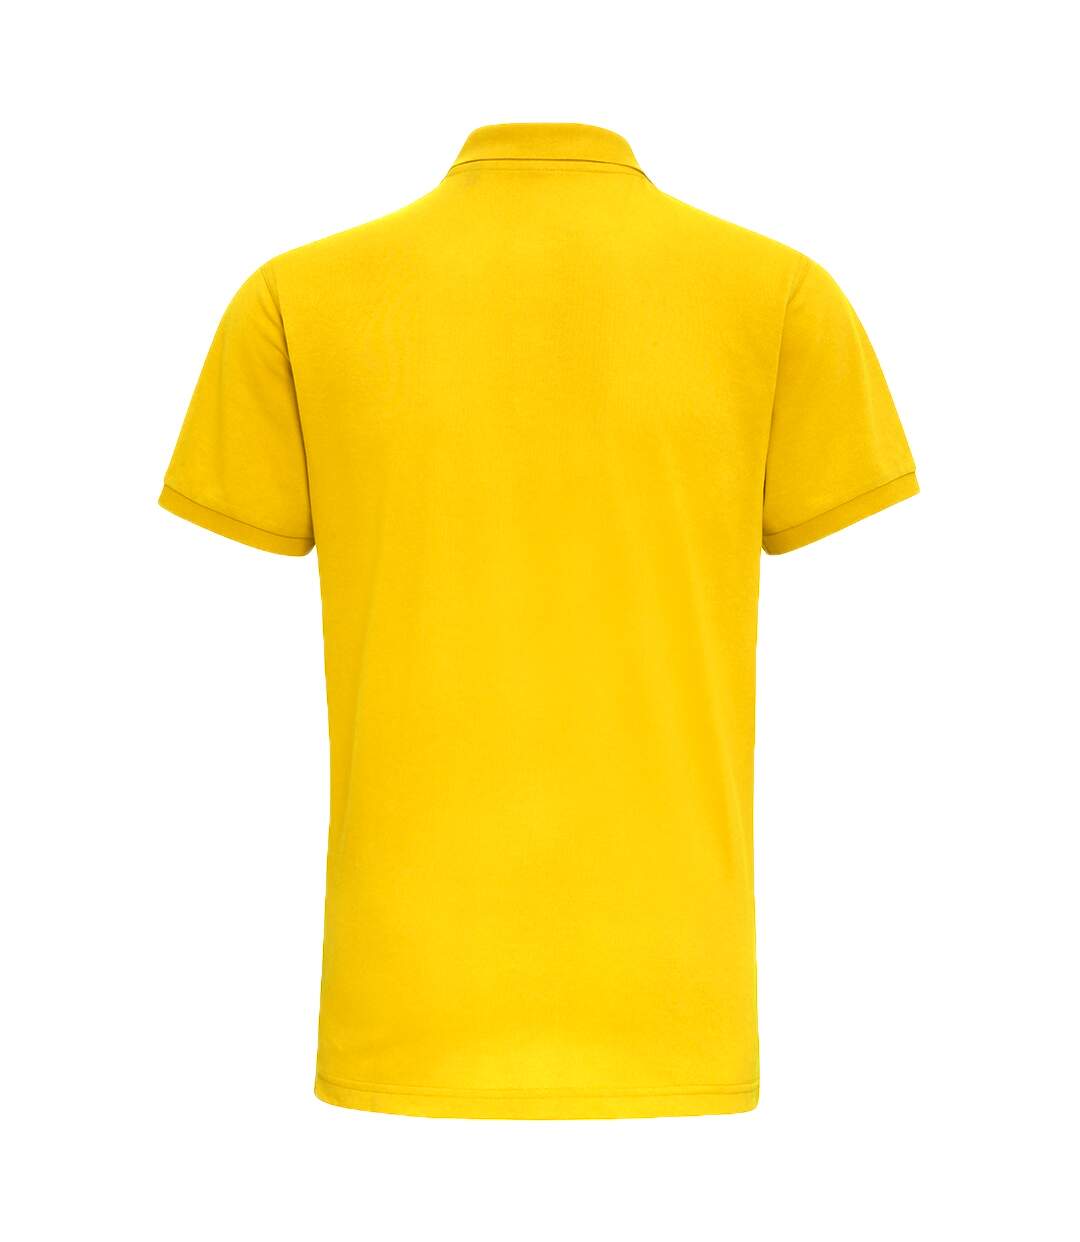 Asquith & Fox Mens Short Sleeve Performance Blend Polo Shirt (Sunflower)